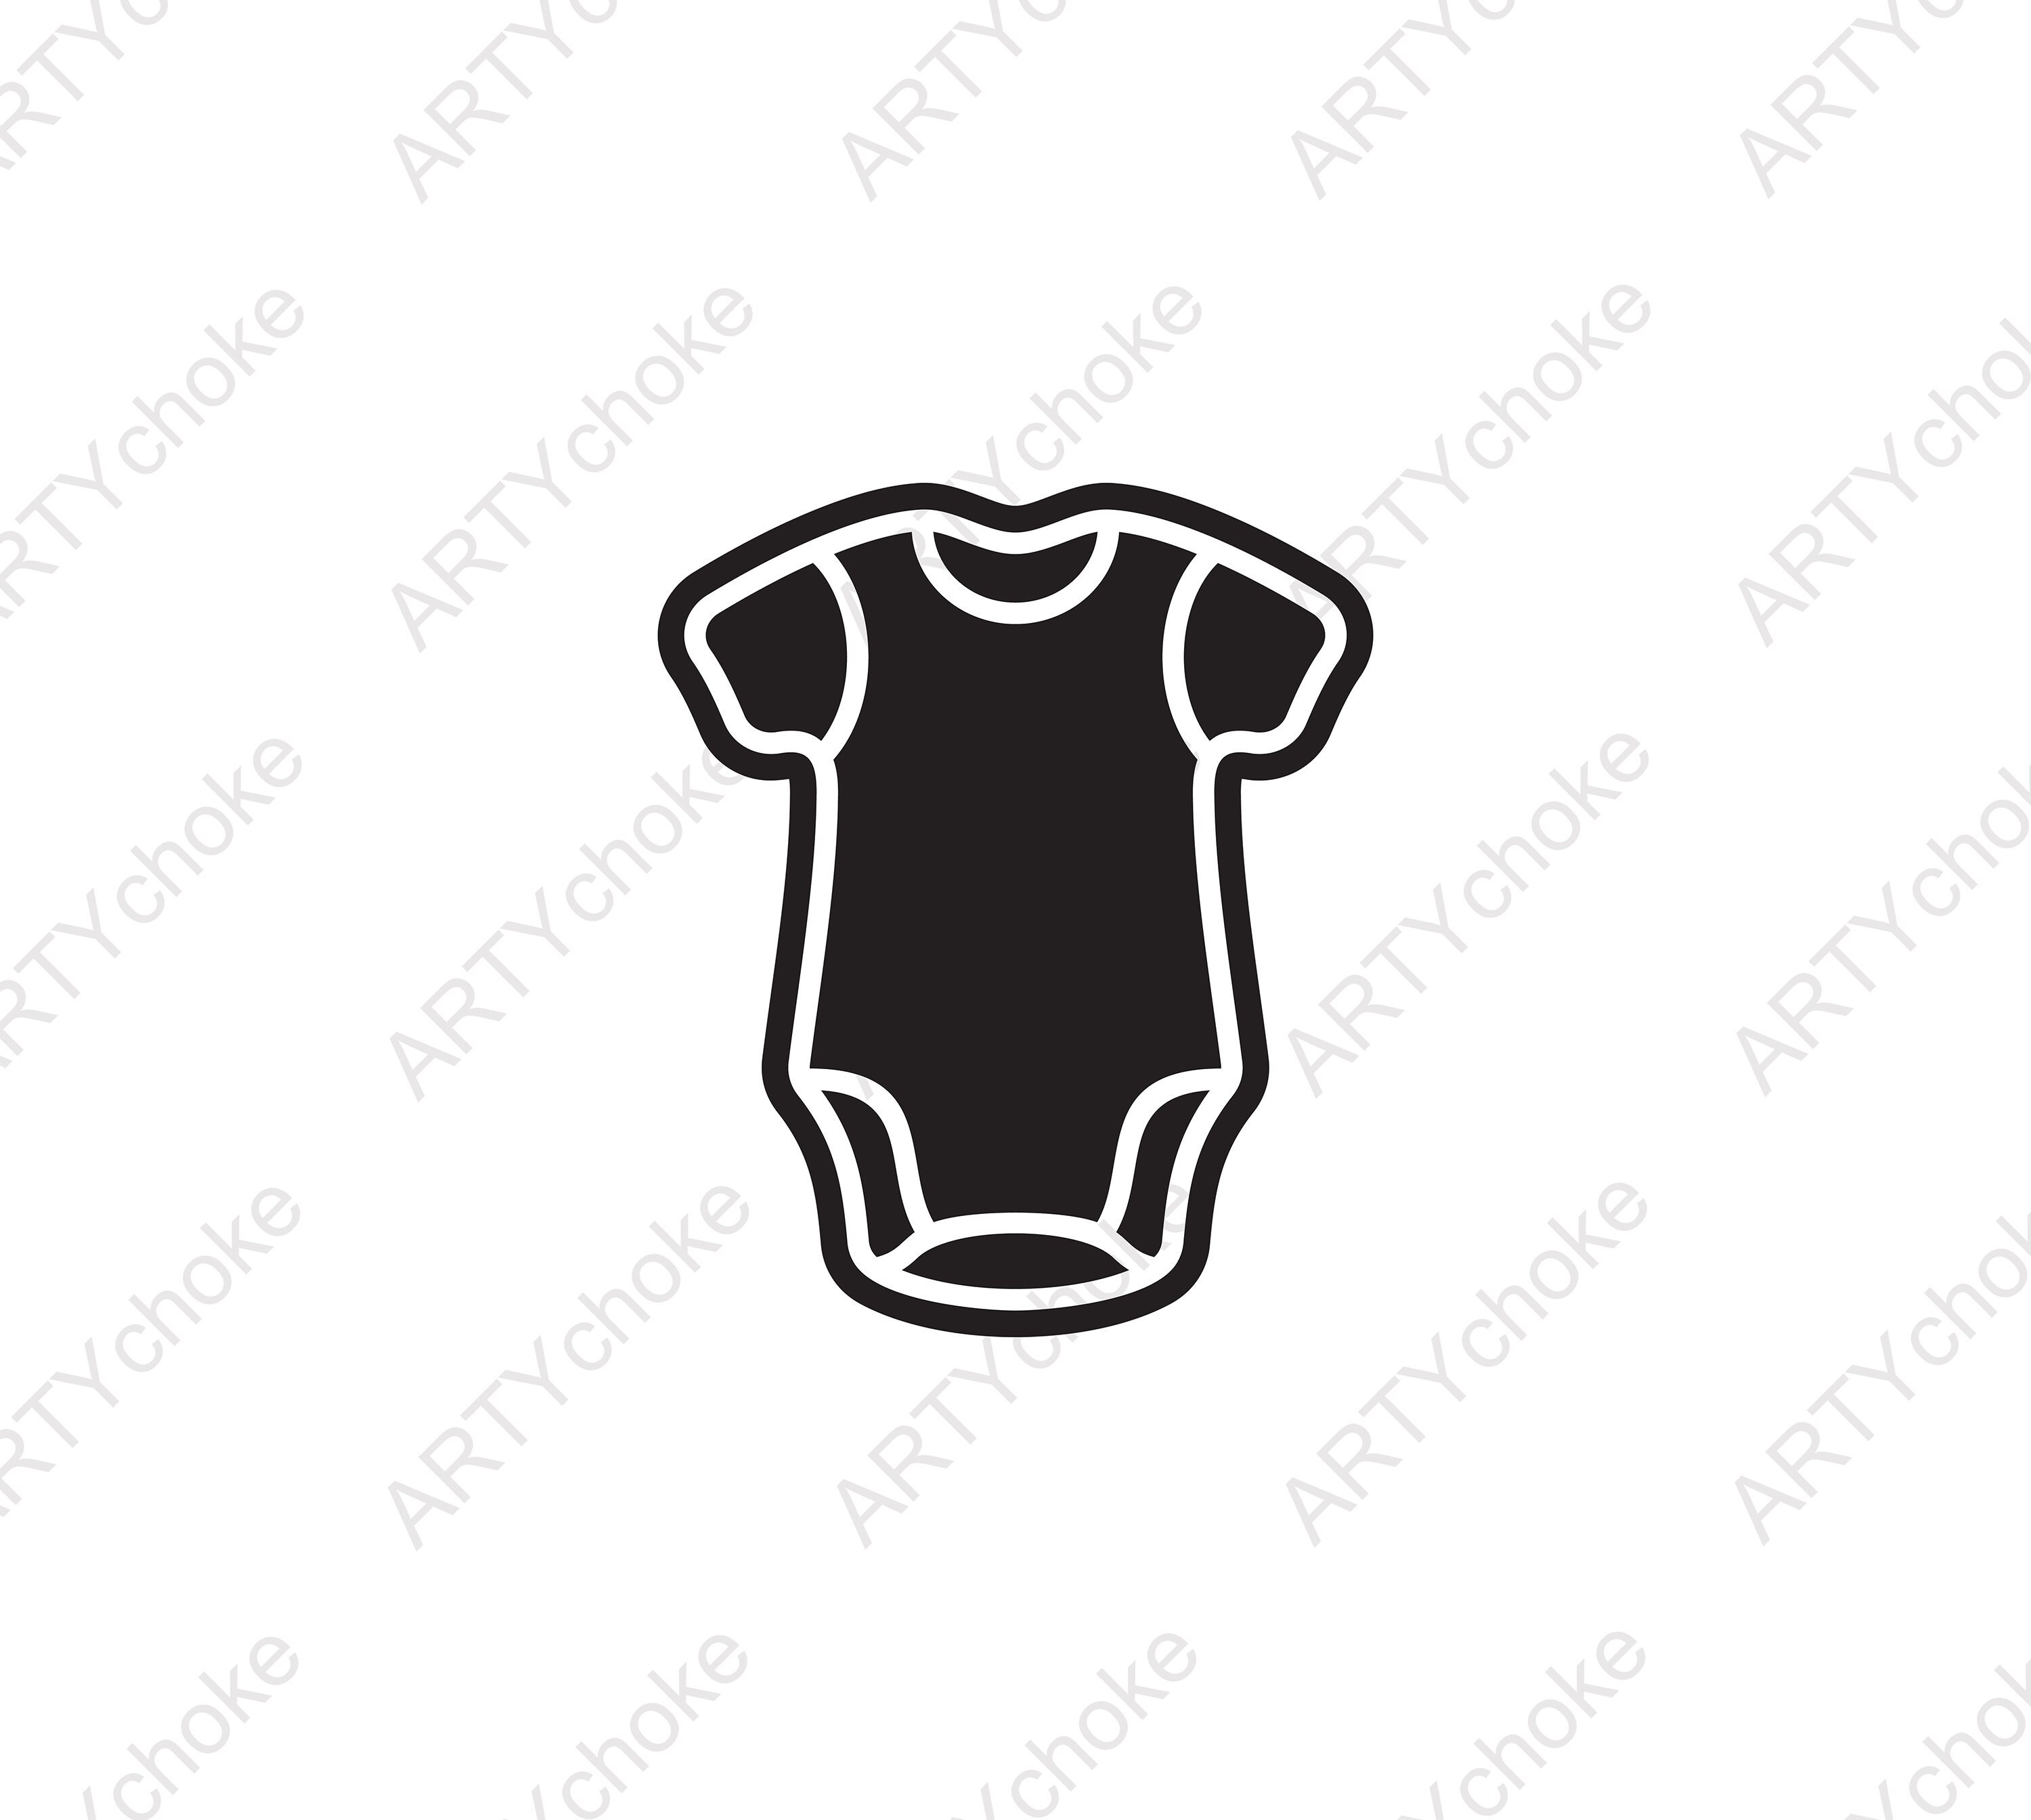 Baby Body Suite. Files Prepared for Cricut. SVG Clip Art. | Etsy